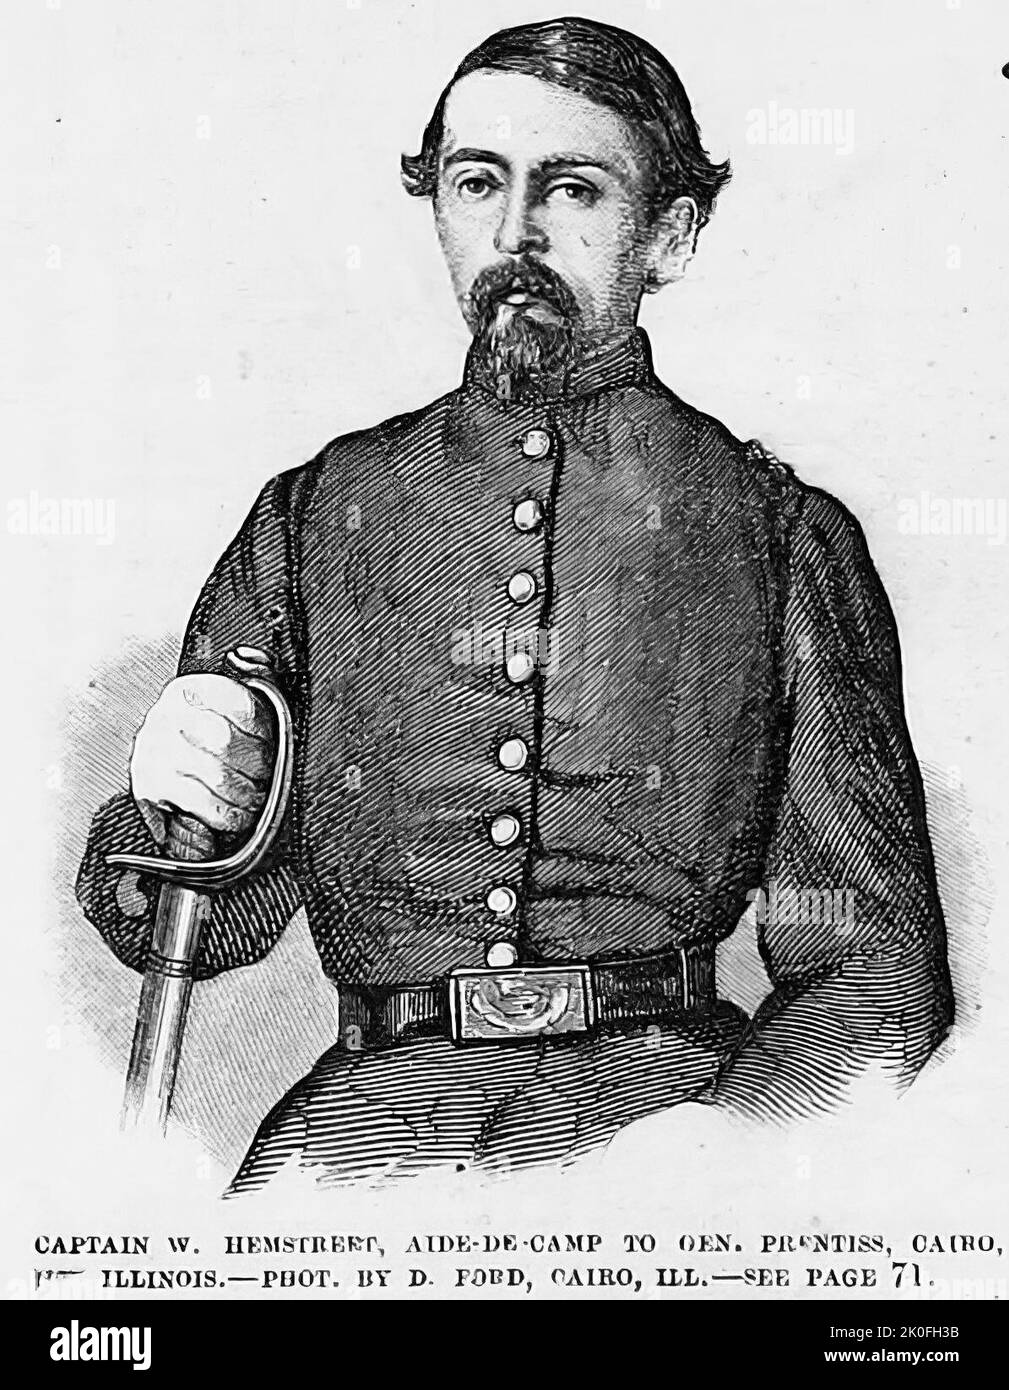 Portrait of Captain W. Hemstreet, aide-de-camp to General Benjamin Prentiss, Cairo, Illinois (1861). 19th century American Civil War illustration from Frank Leslie's Illustrated Newspaper Stock Photo